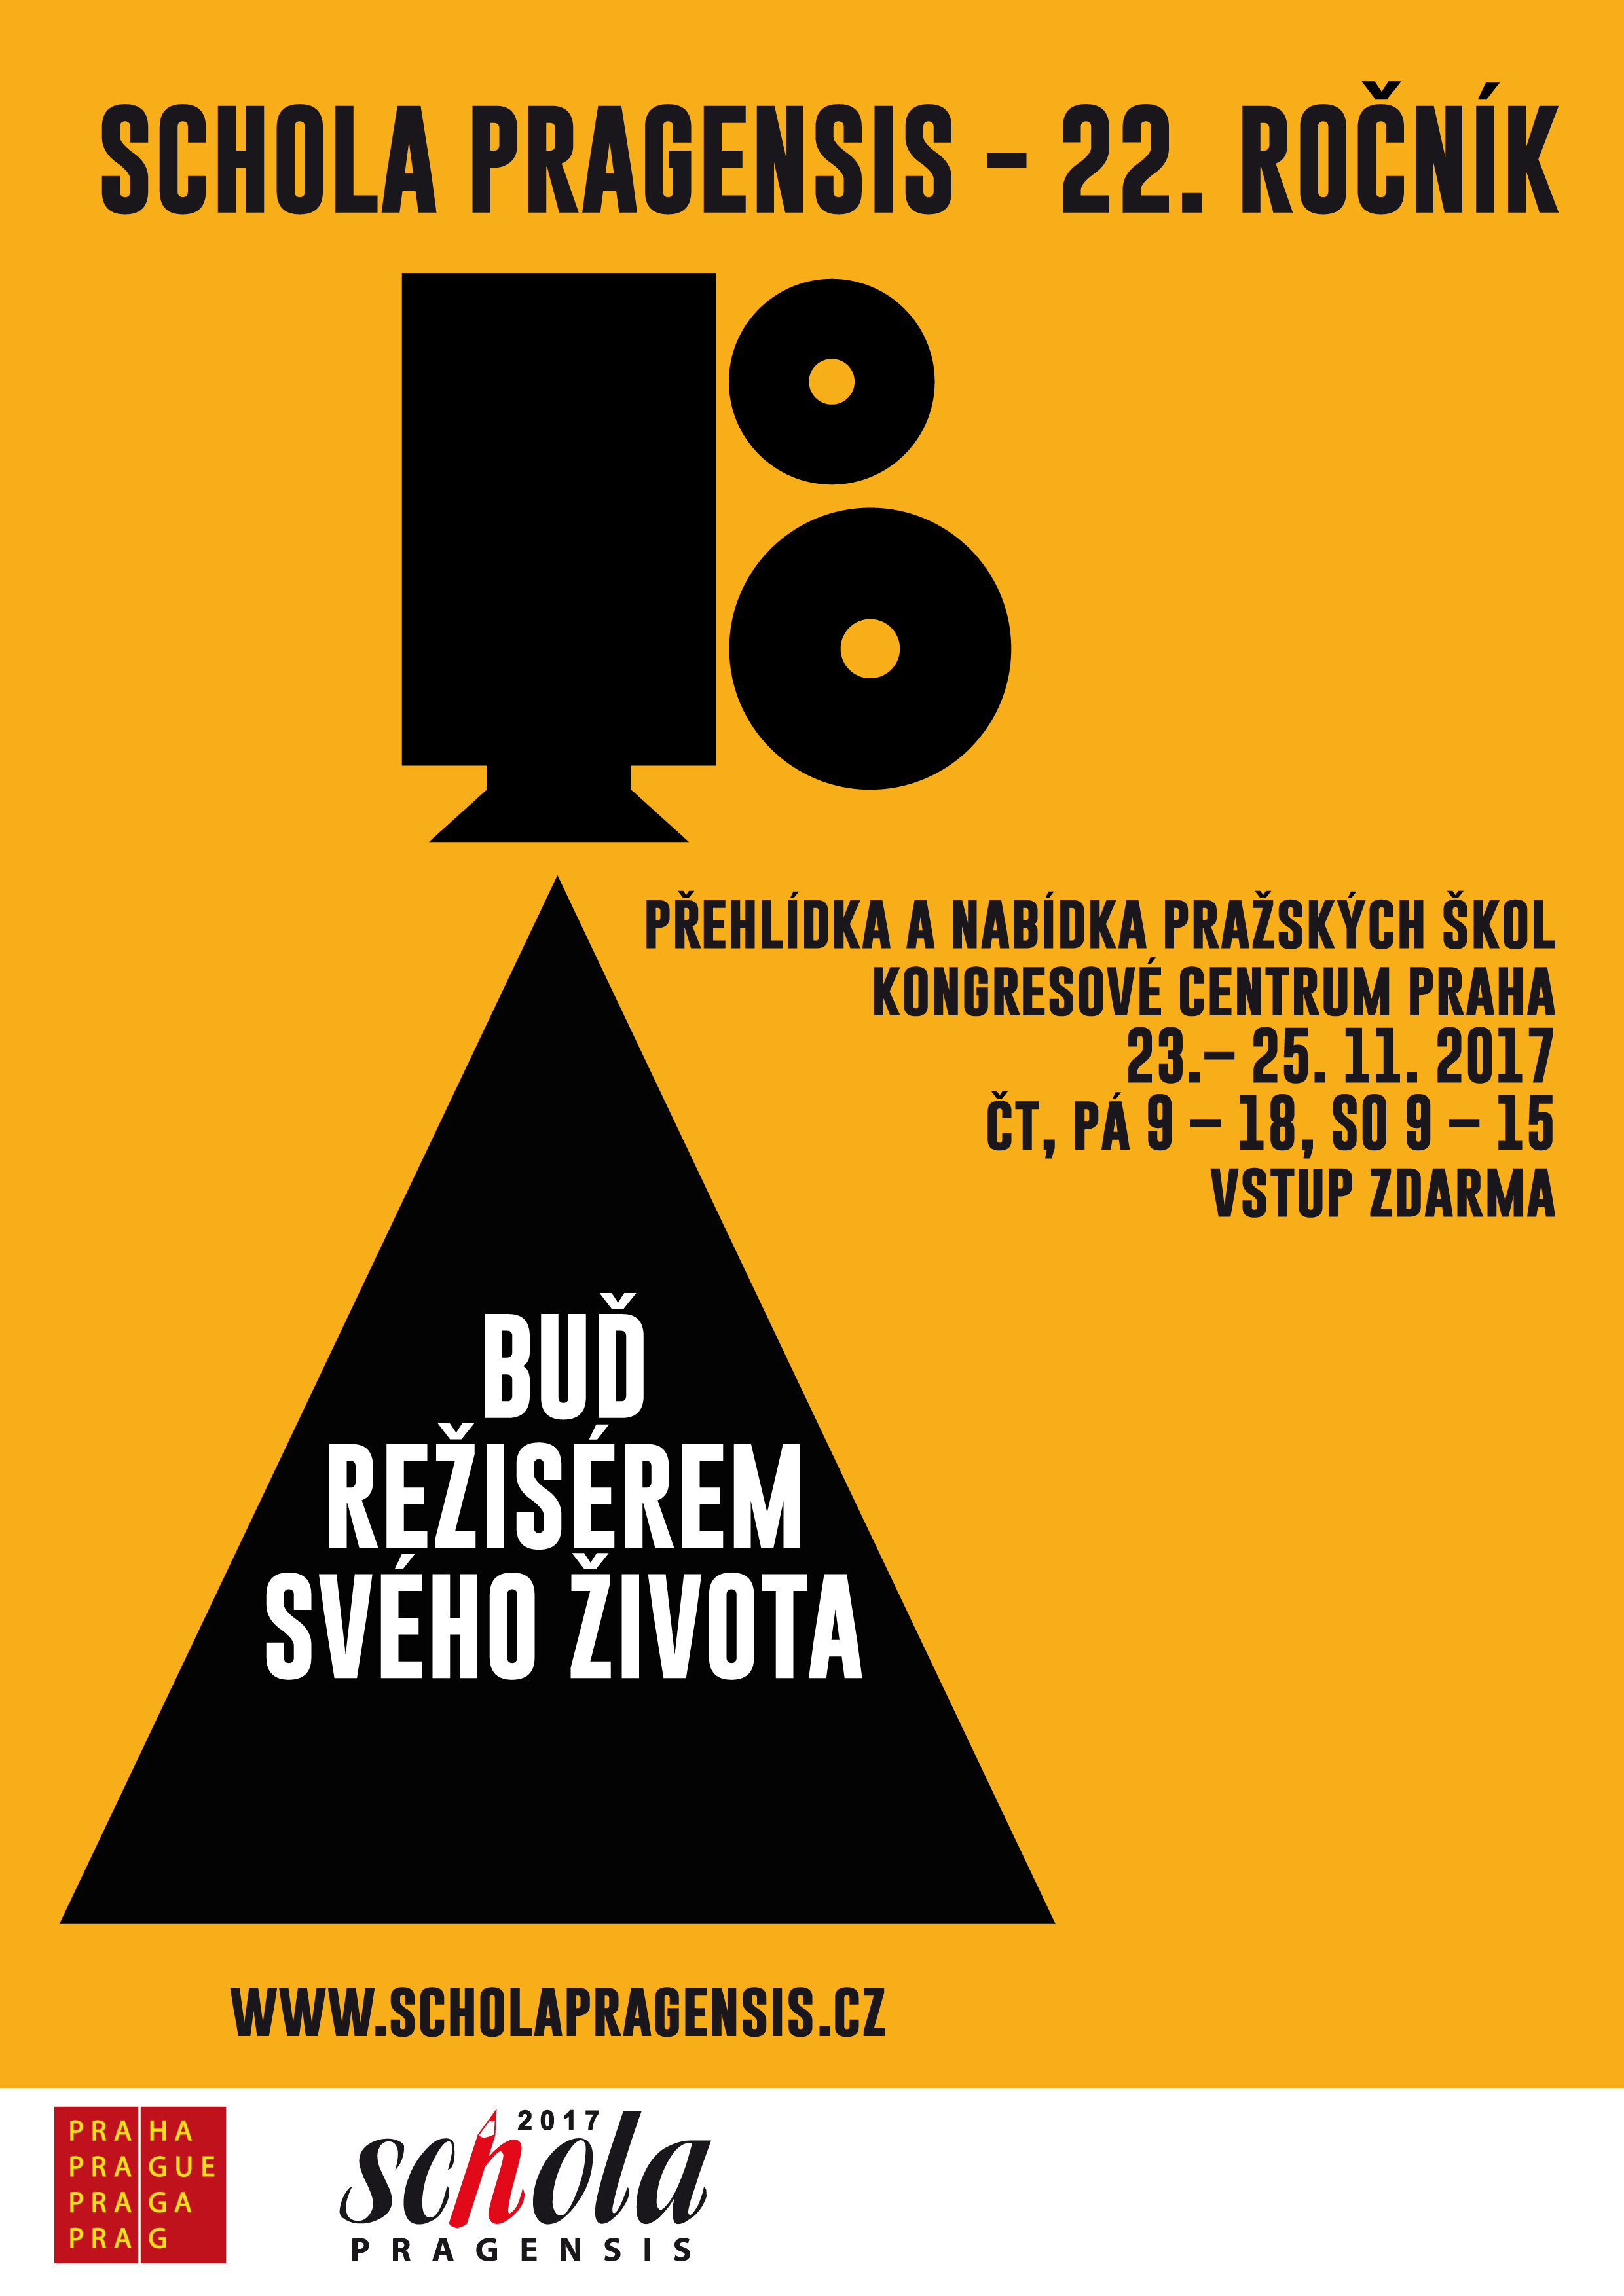 bud_reziserem_sveho_zivota_schola